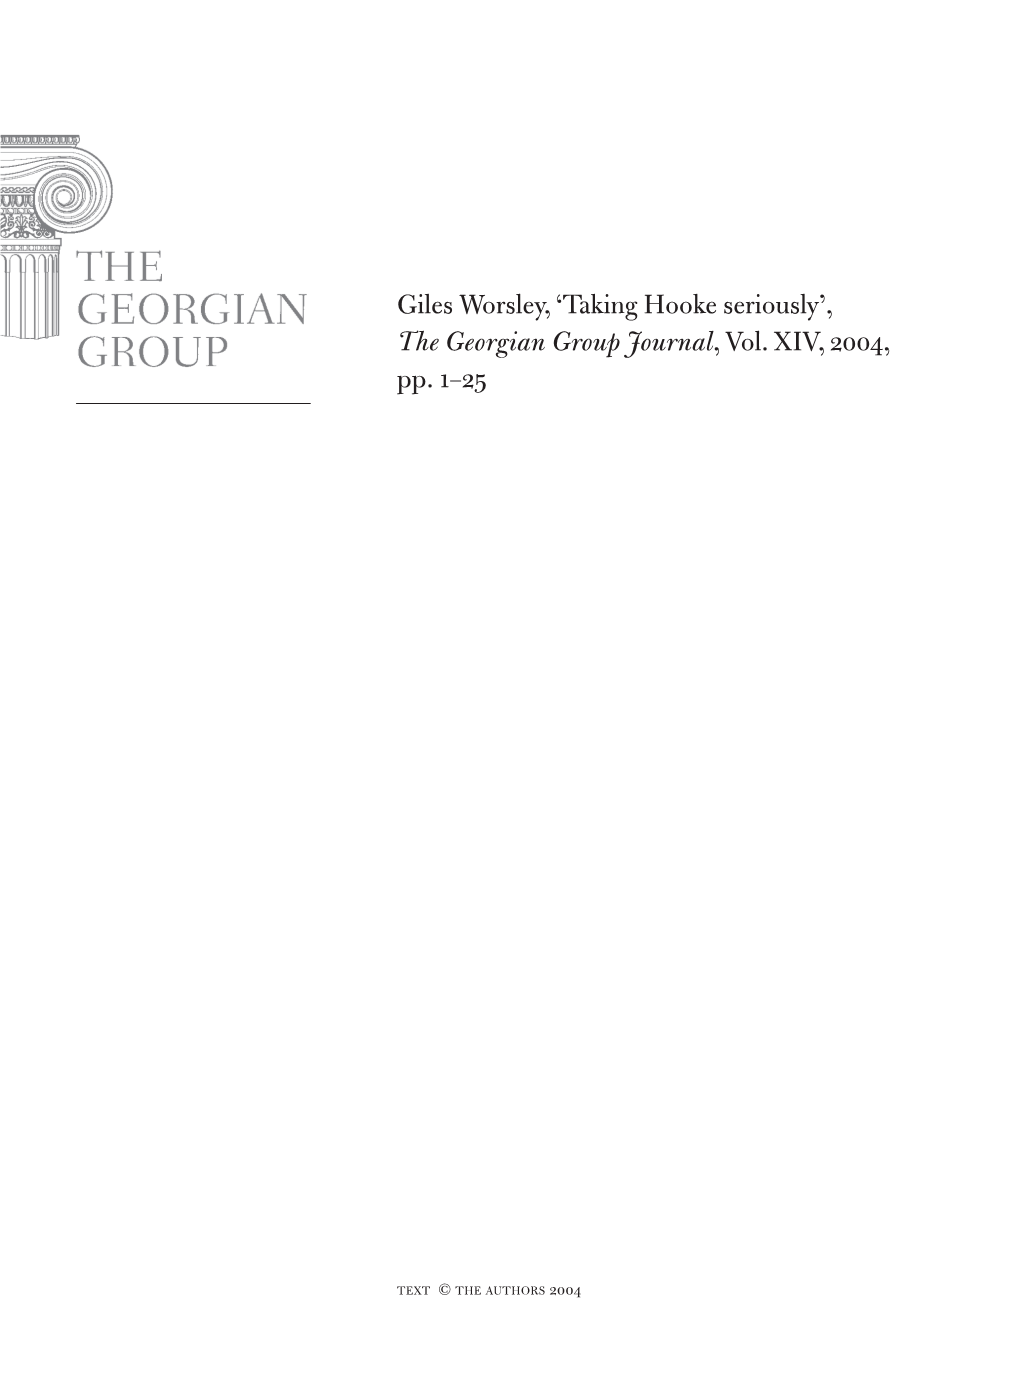 Giles Worsley, 'Taking Hooke Seriously', the Georgian Group